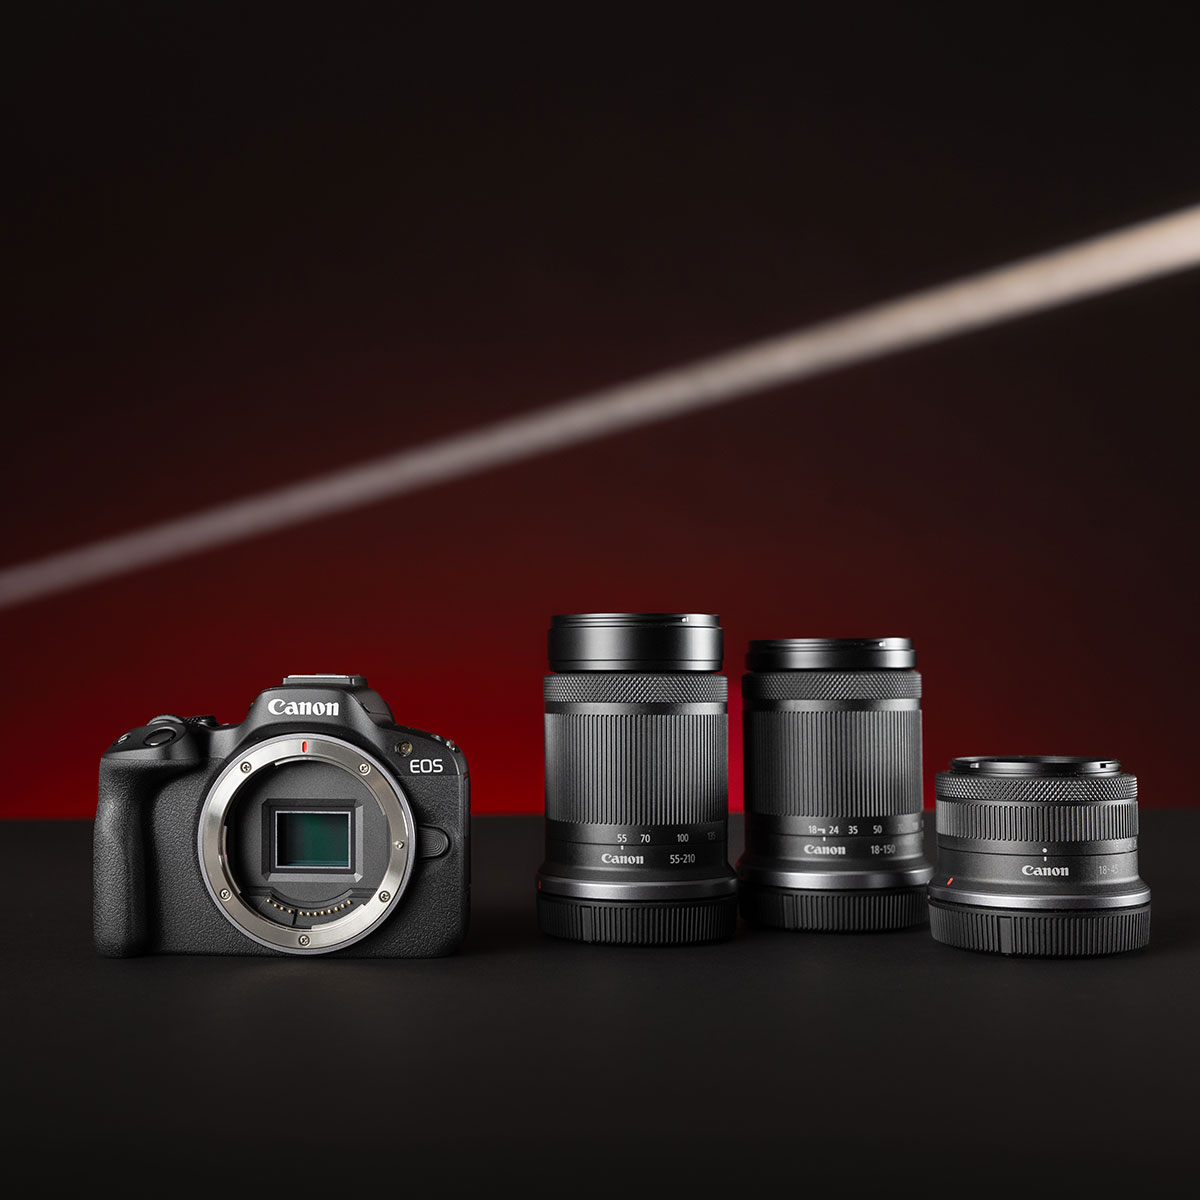 Canon EOS camera and lenses